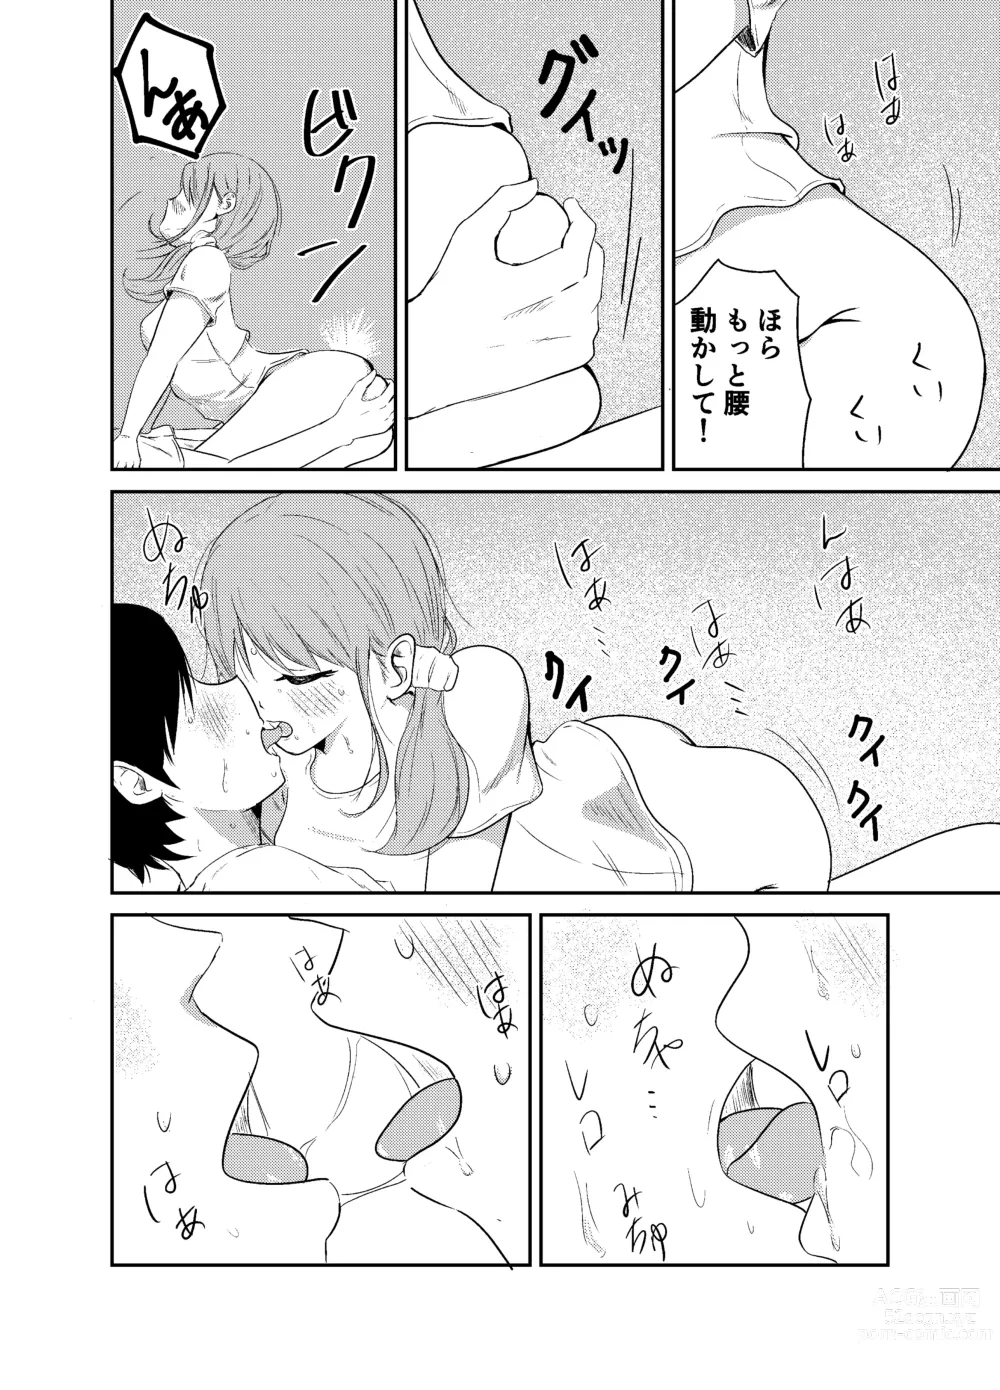 Page 14 of doujinshi Jimi Megane Shunin Hoikushi, Okasareru